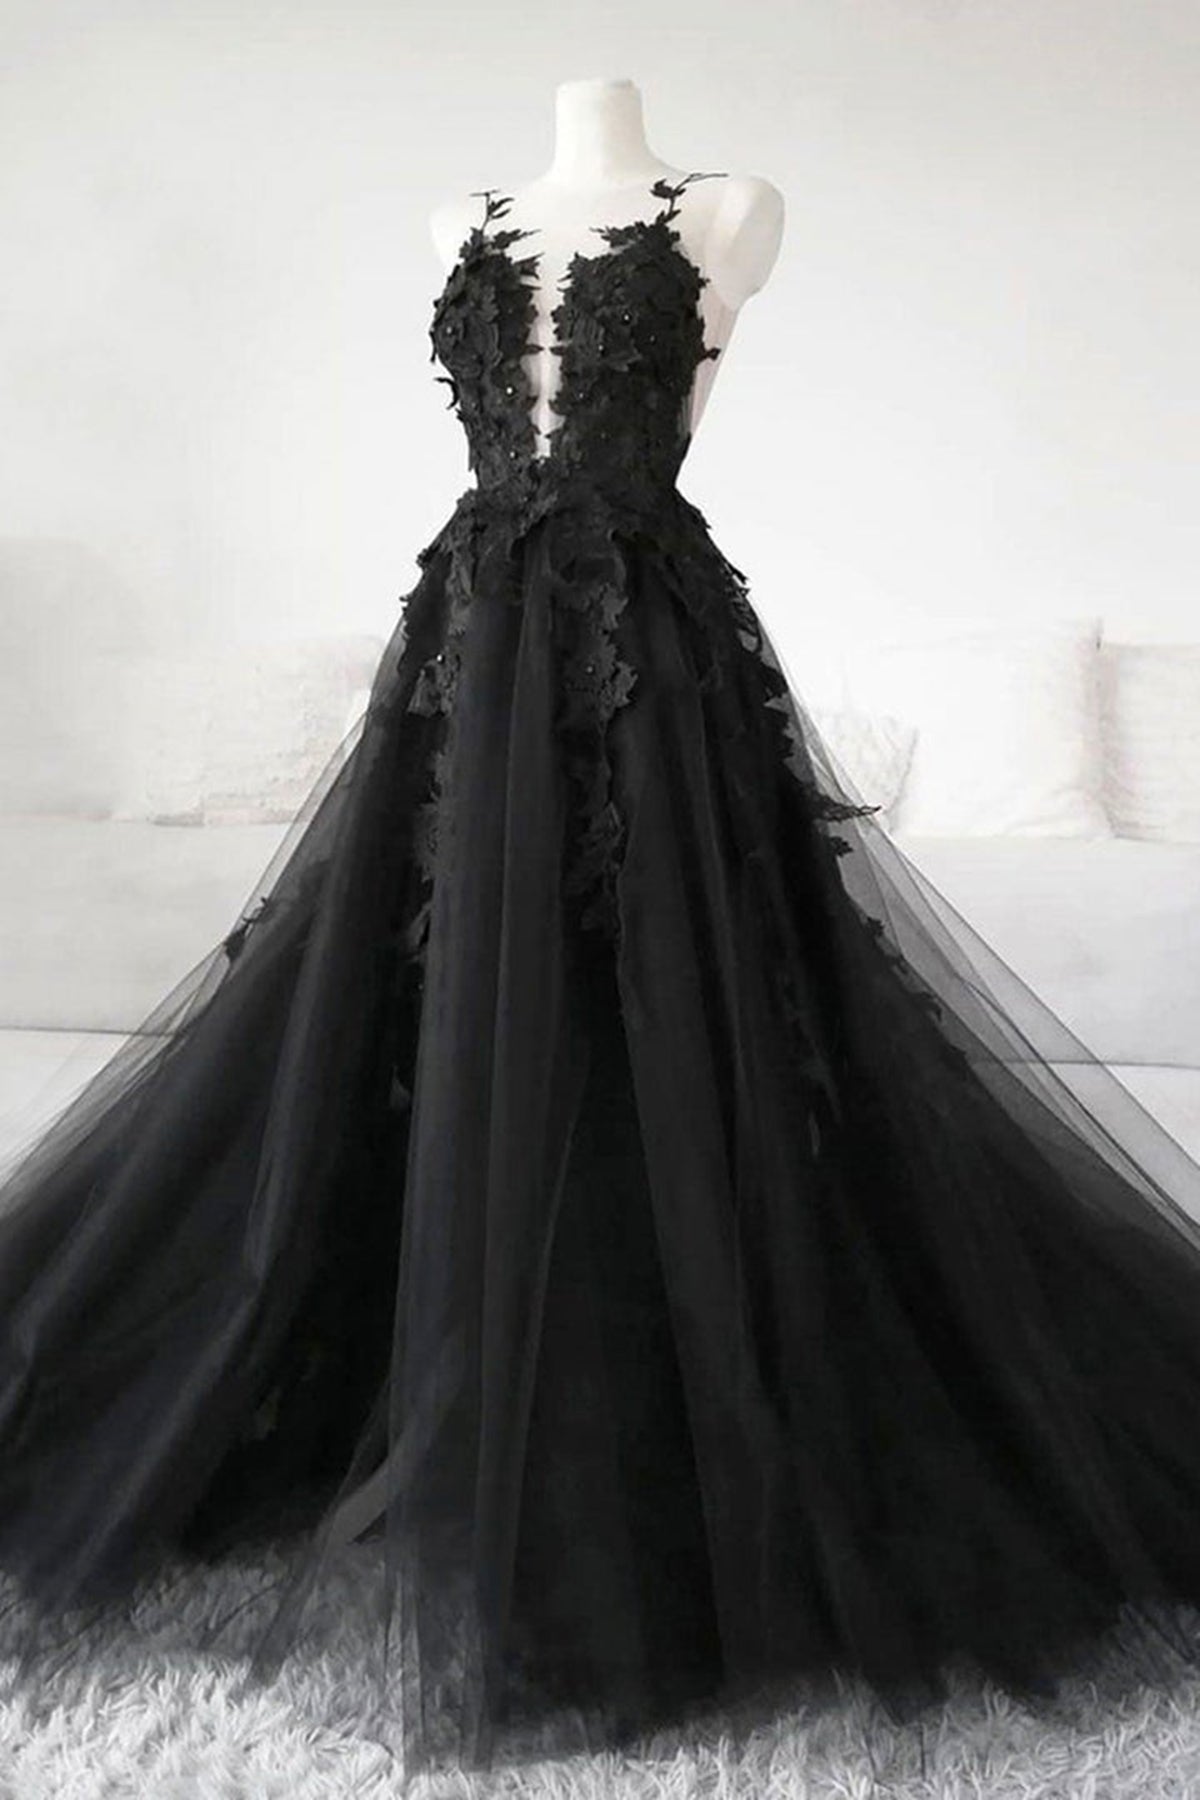 V Neck Open Back Black Tulle Lace Floral Long Prom Dresses, Black Lace Formal Evening Dresses with Appliques EP1688